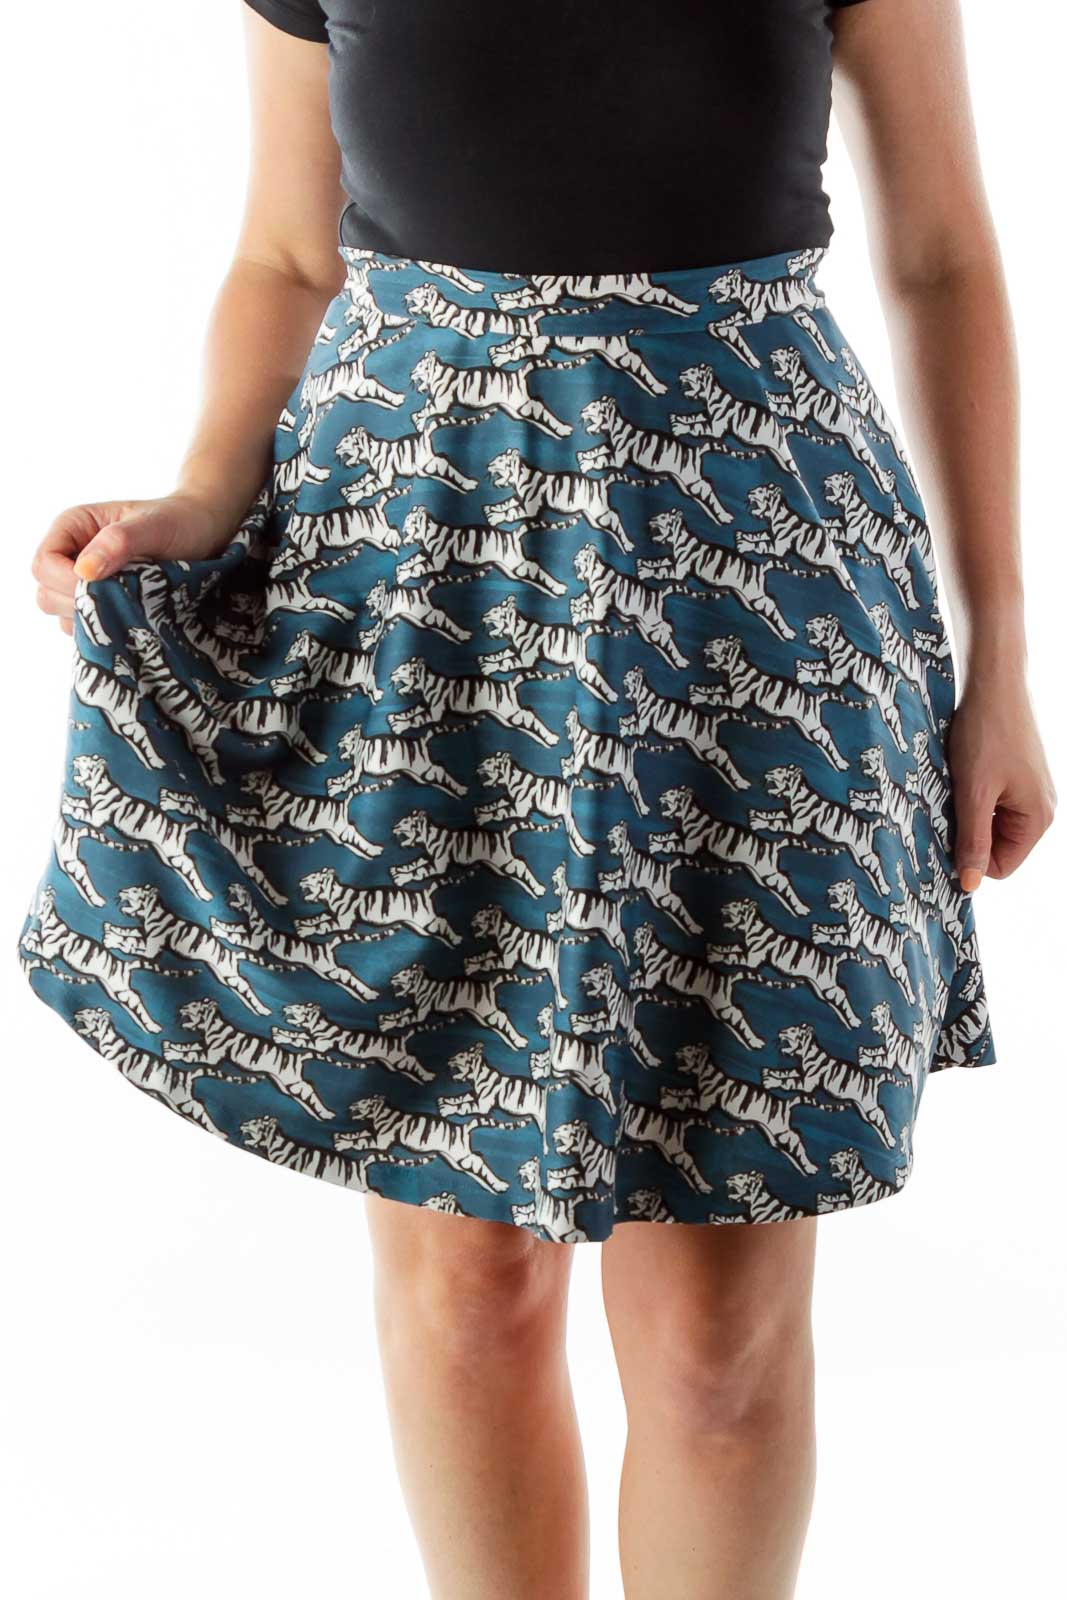 Blue Animal Print A-Line Skirt Front